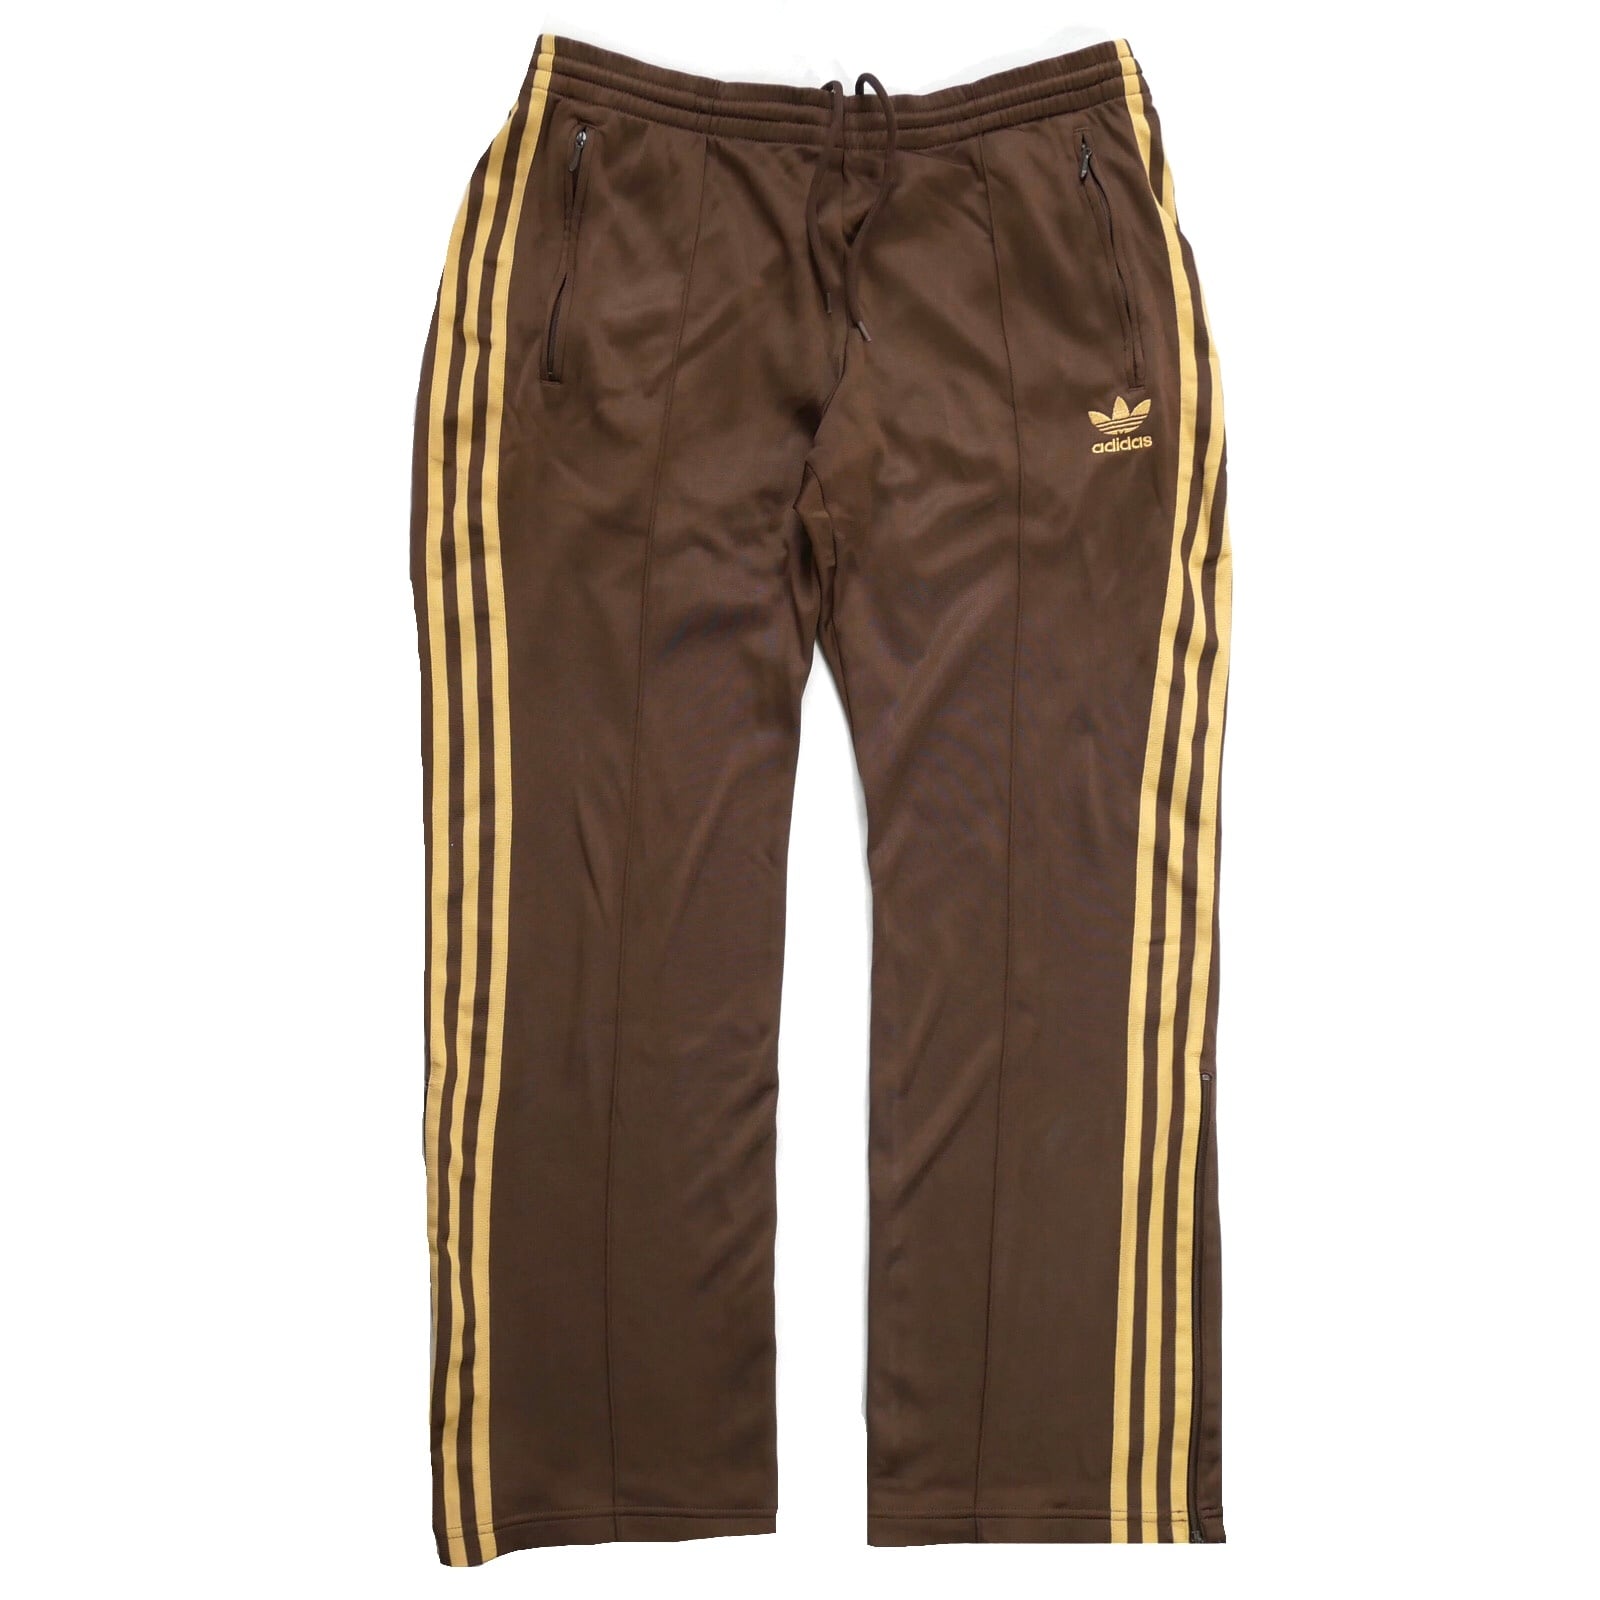 adidas track pants Brown×yellow beige | SWIRLY EYES